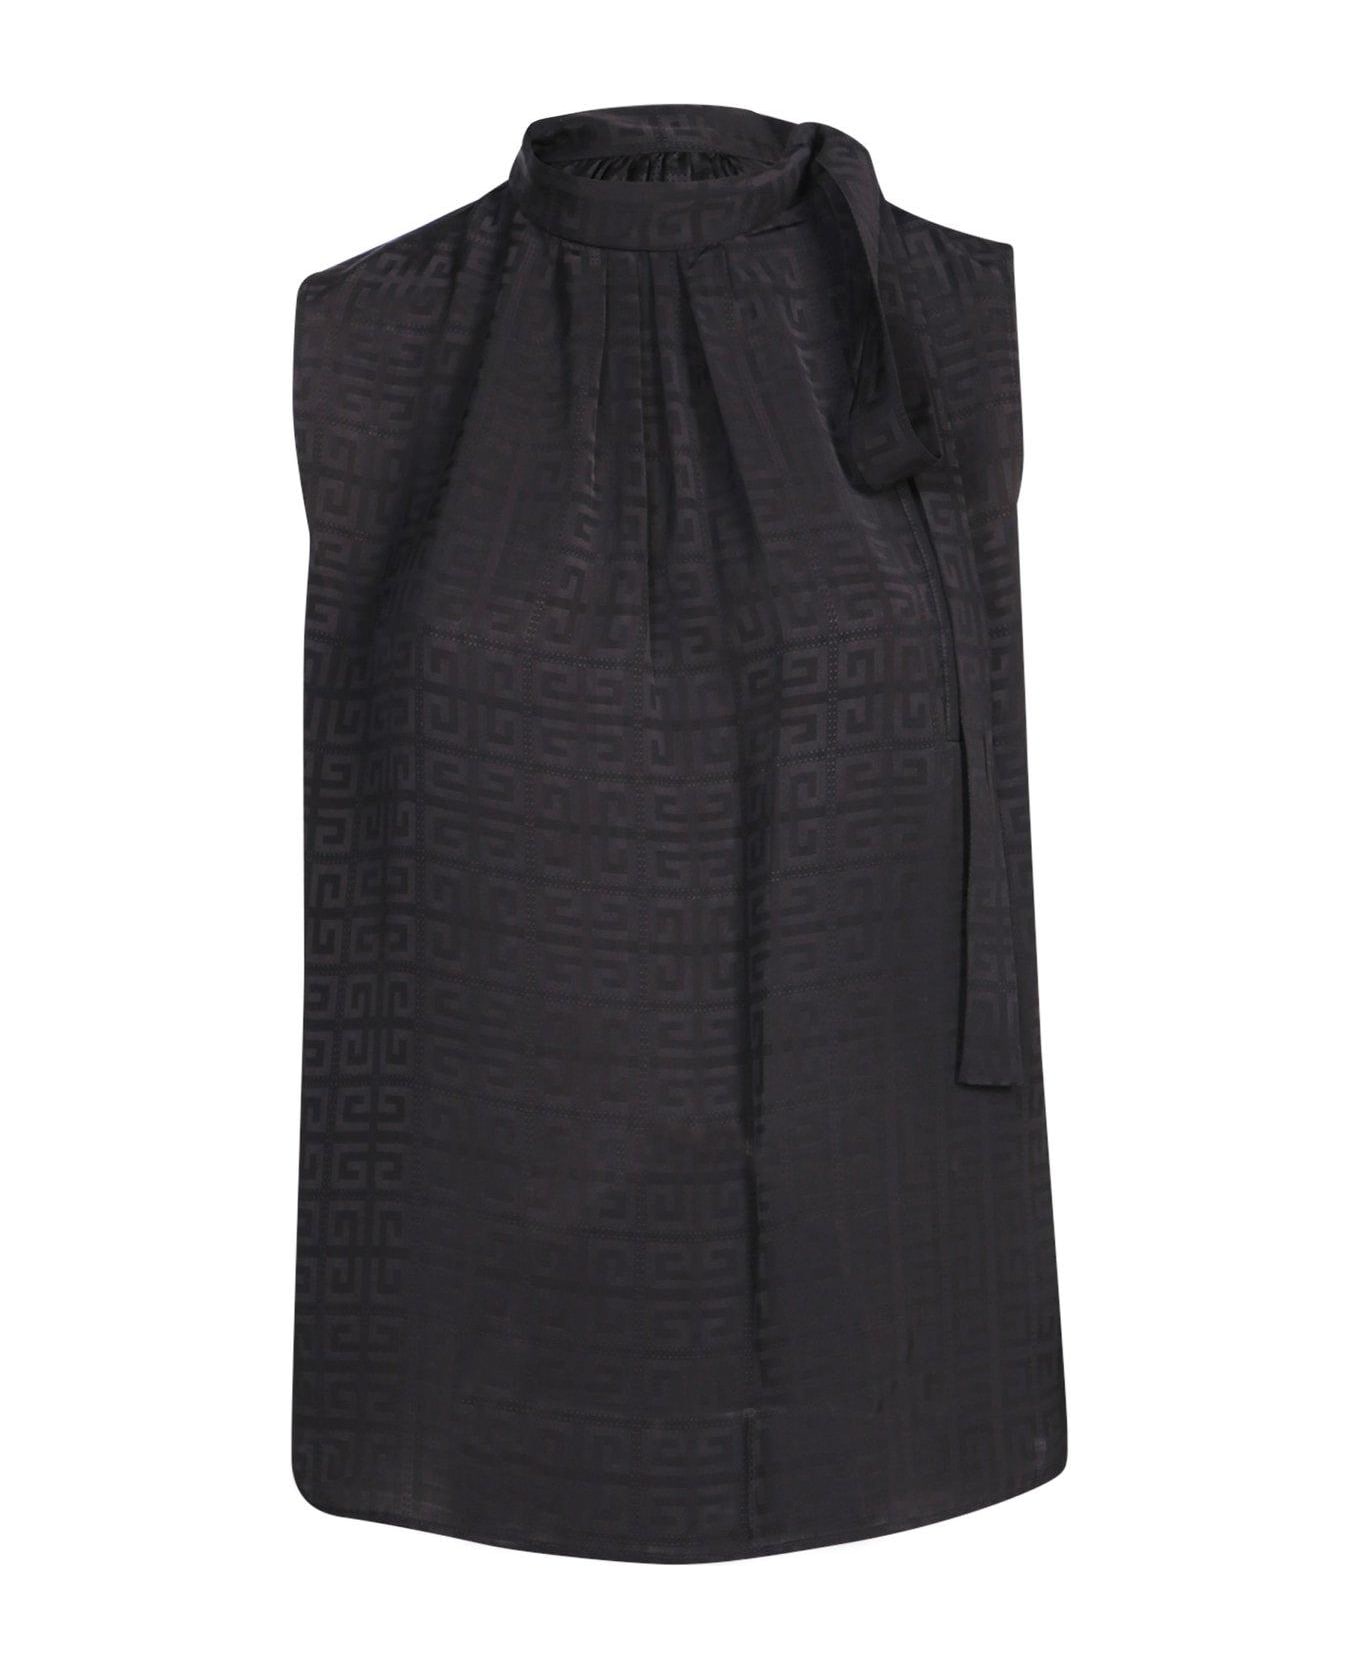 Givenchy 4g Pattern Jacquard Sleeveless Top - Black